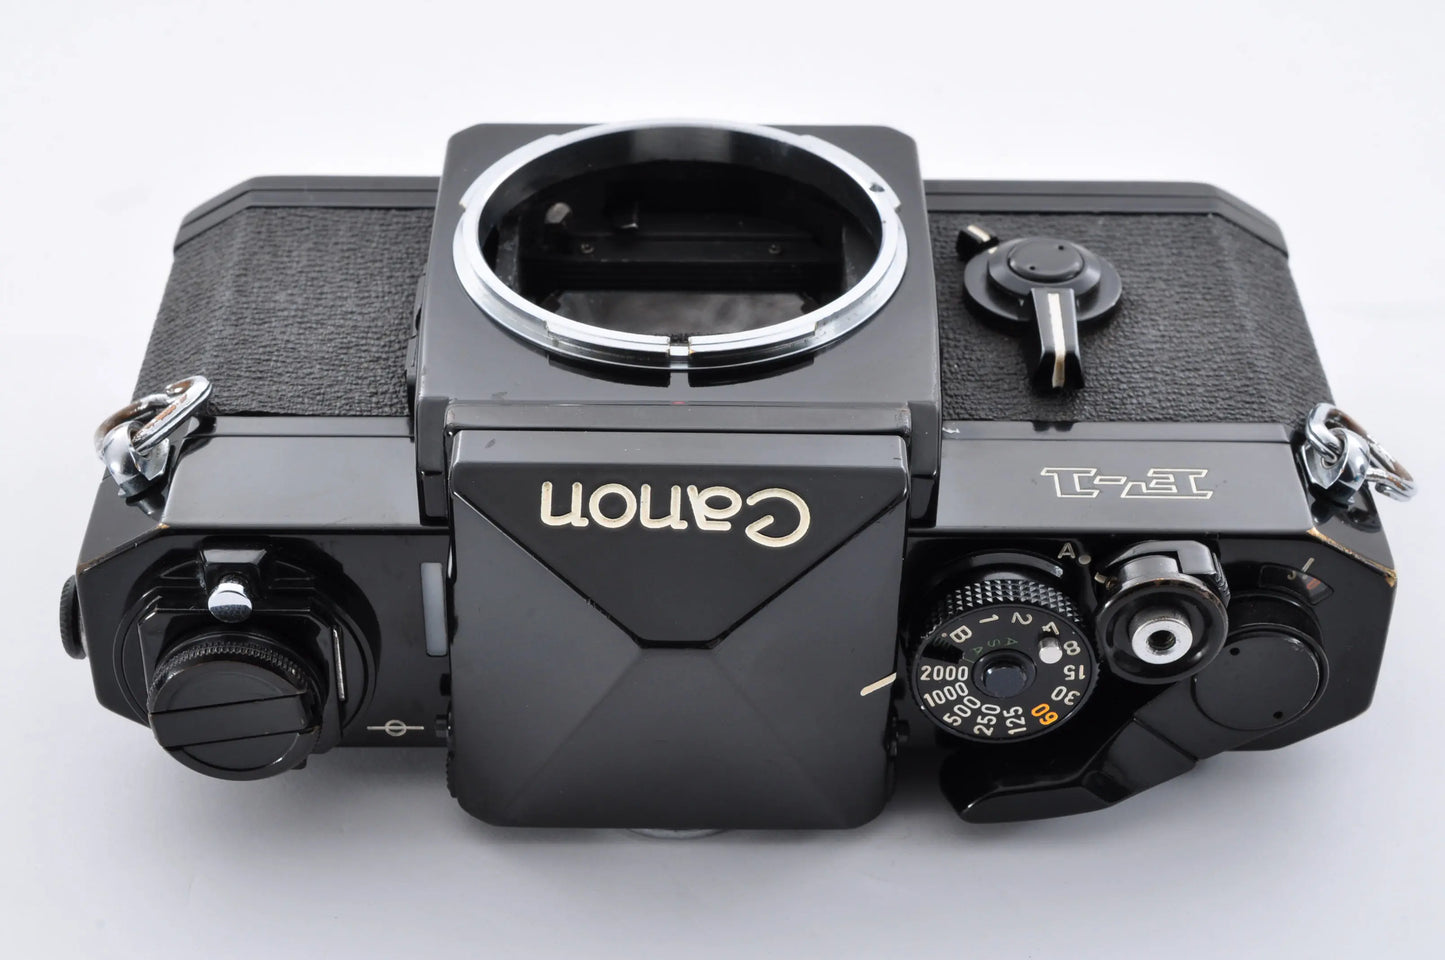 Canon F-1 Late model SLR 35mm Film Camera FD 50mm f/1.4 S.S.C. SSC "O" Fm Jp #530948